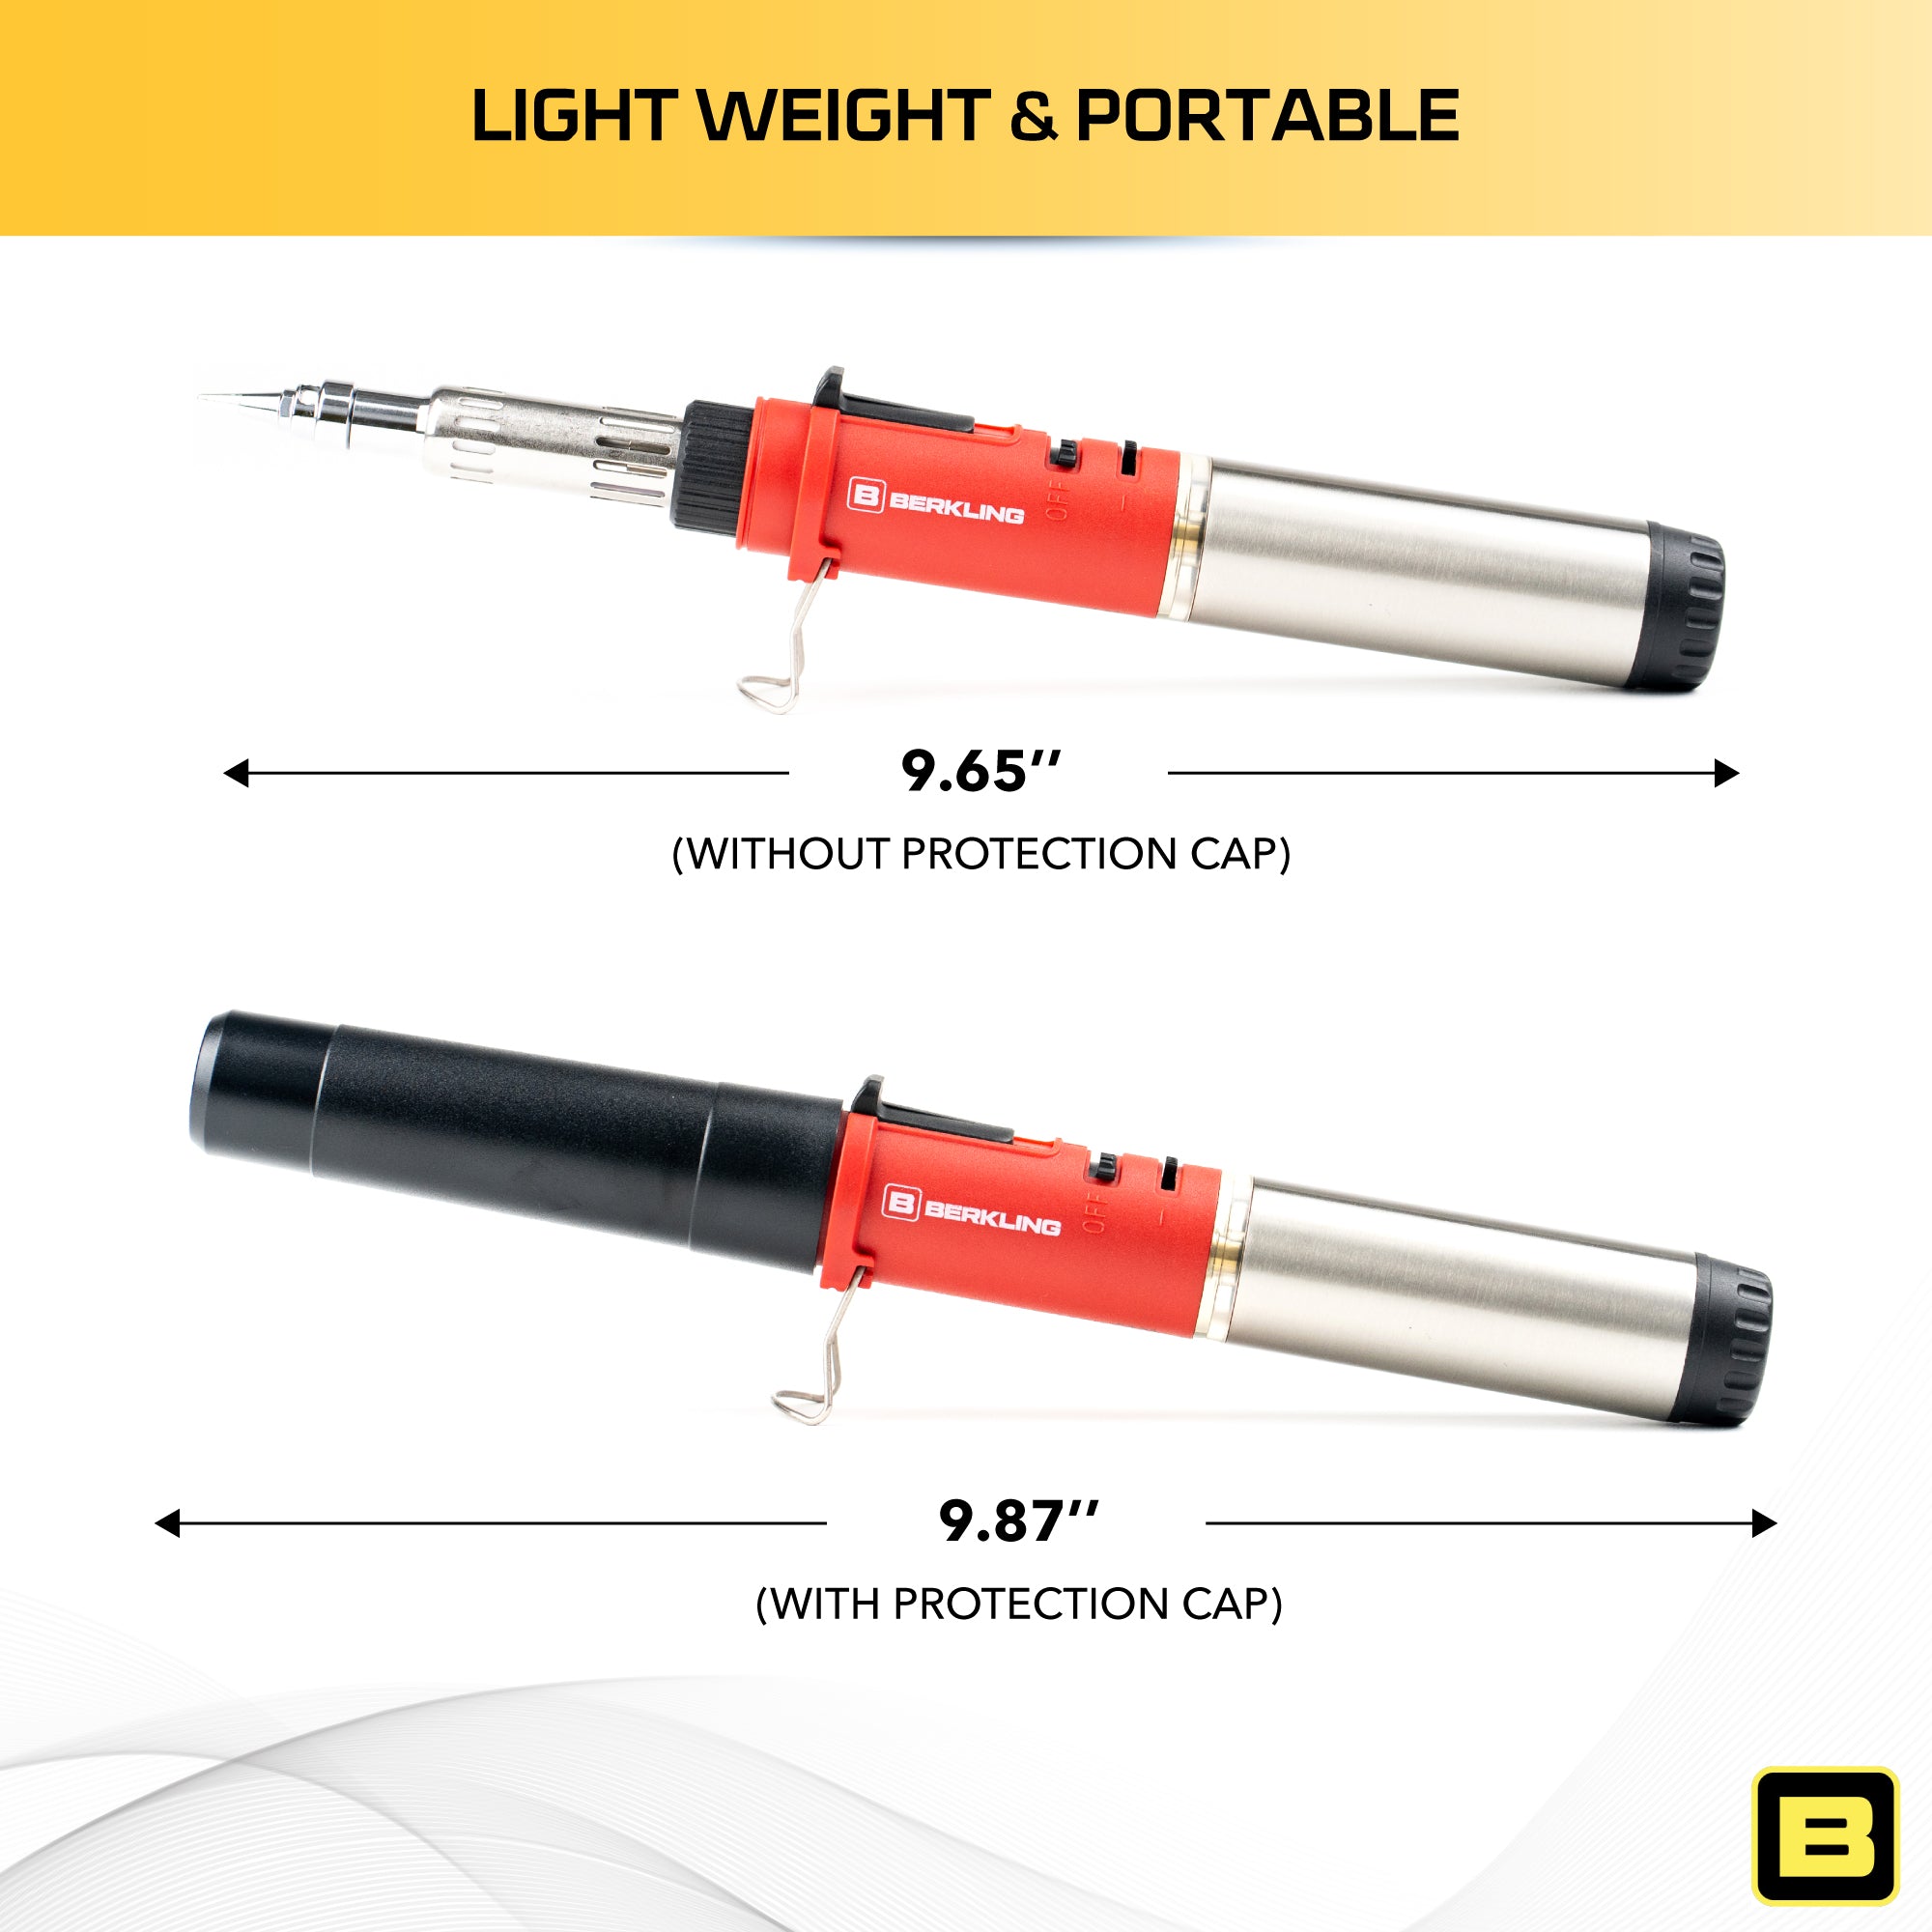 Berkling BSG-568 Butane Soldering Iron Kit - Self-Ignite, Instant Start, Portable Cordless Welding Micro Solder Torch Heat Gun Includes 5 Tips, 15g